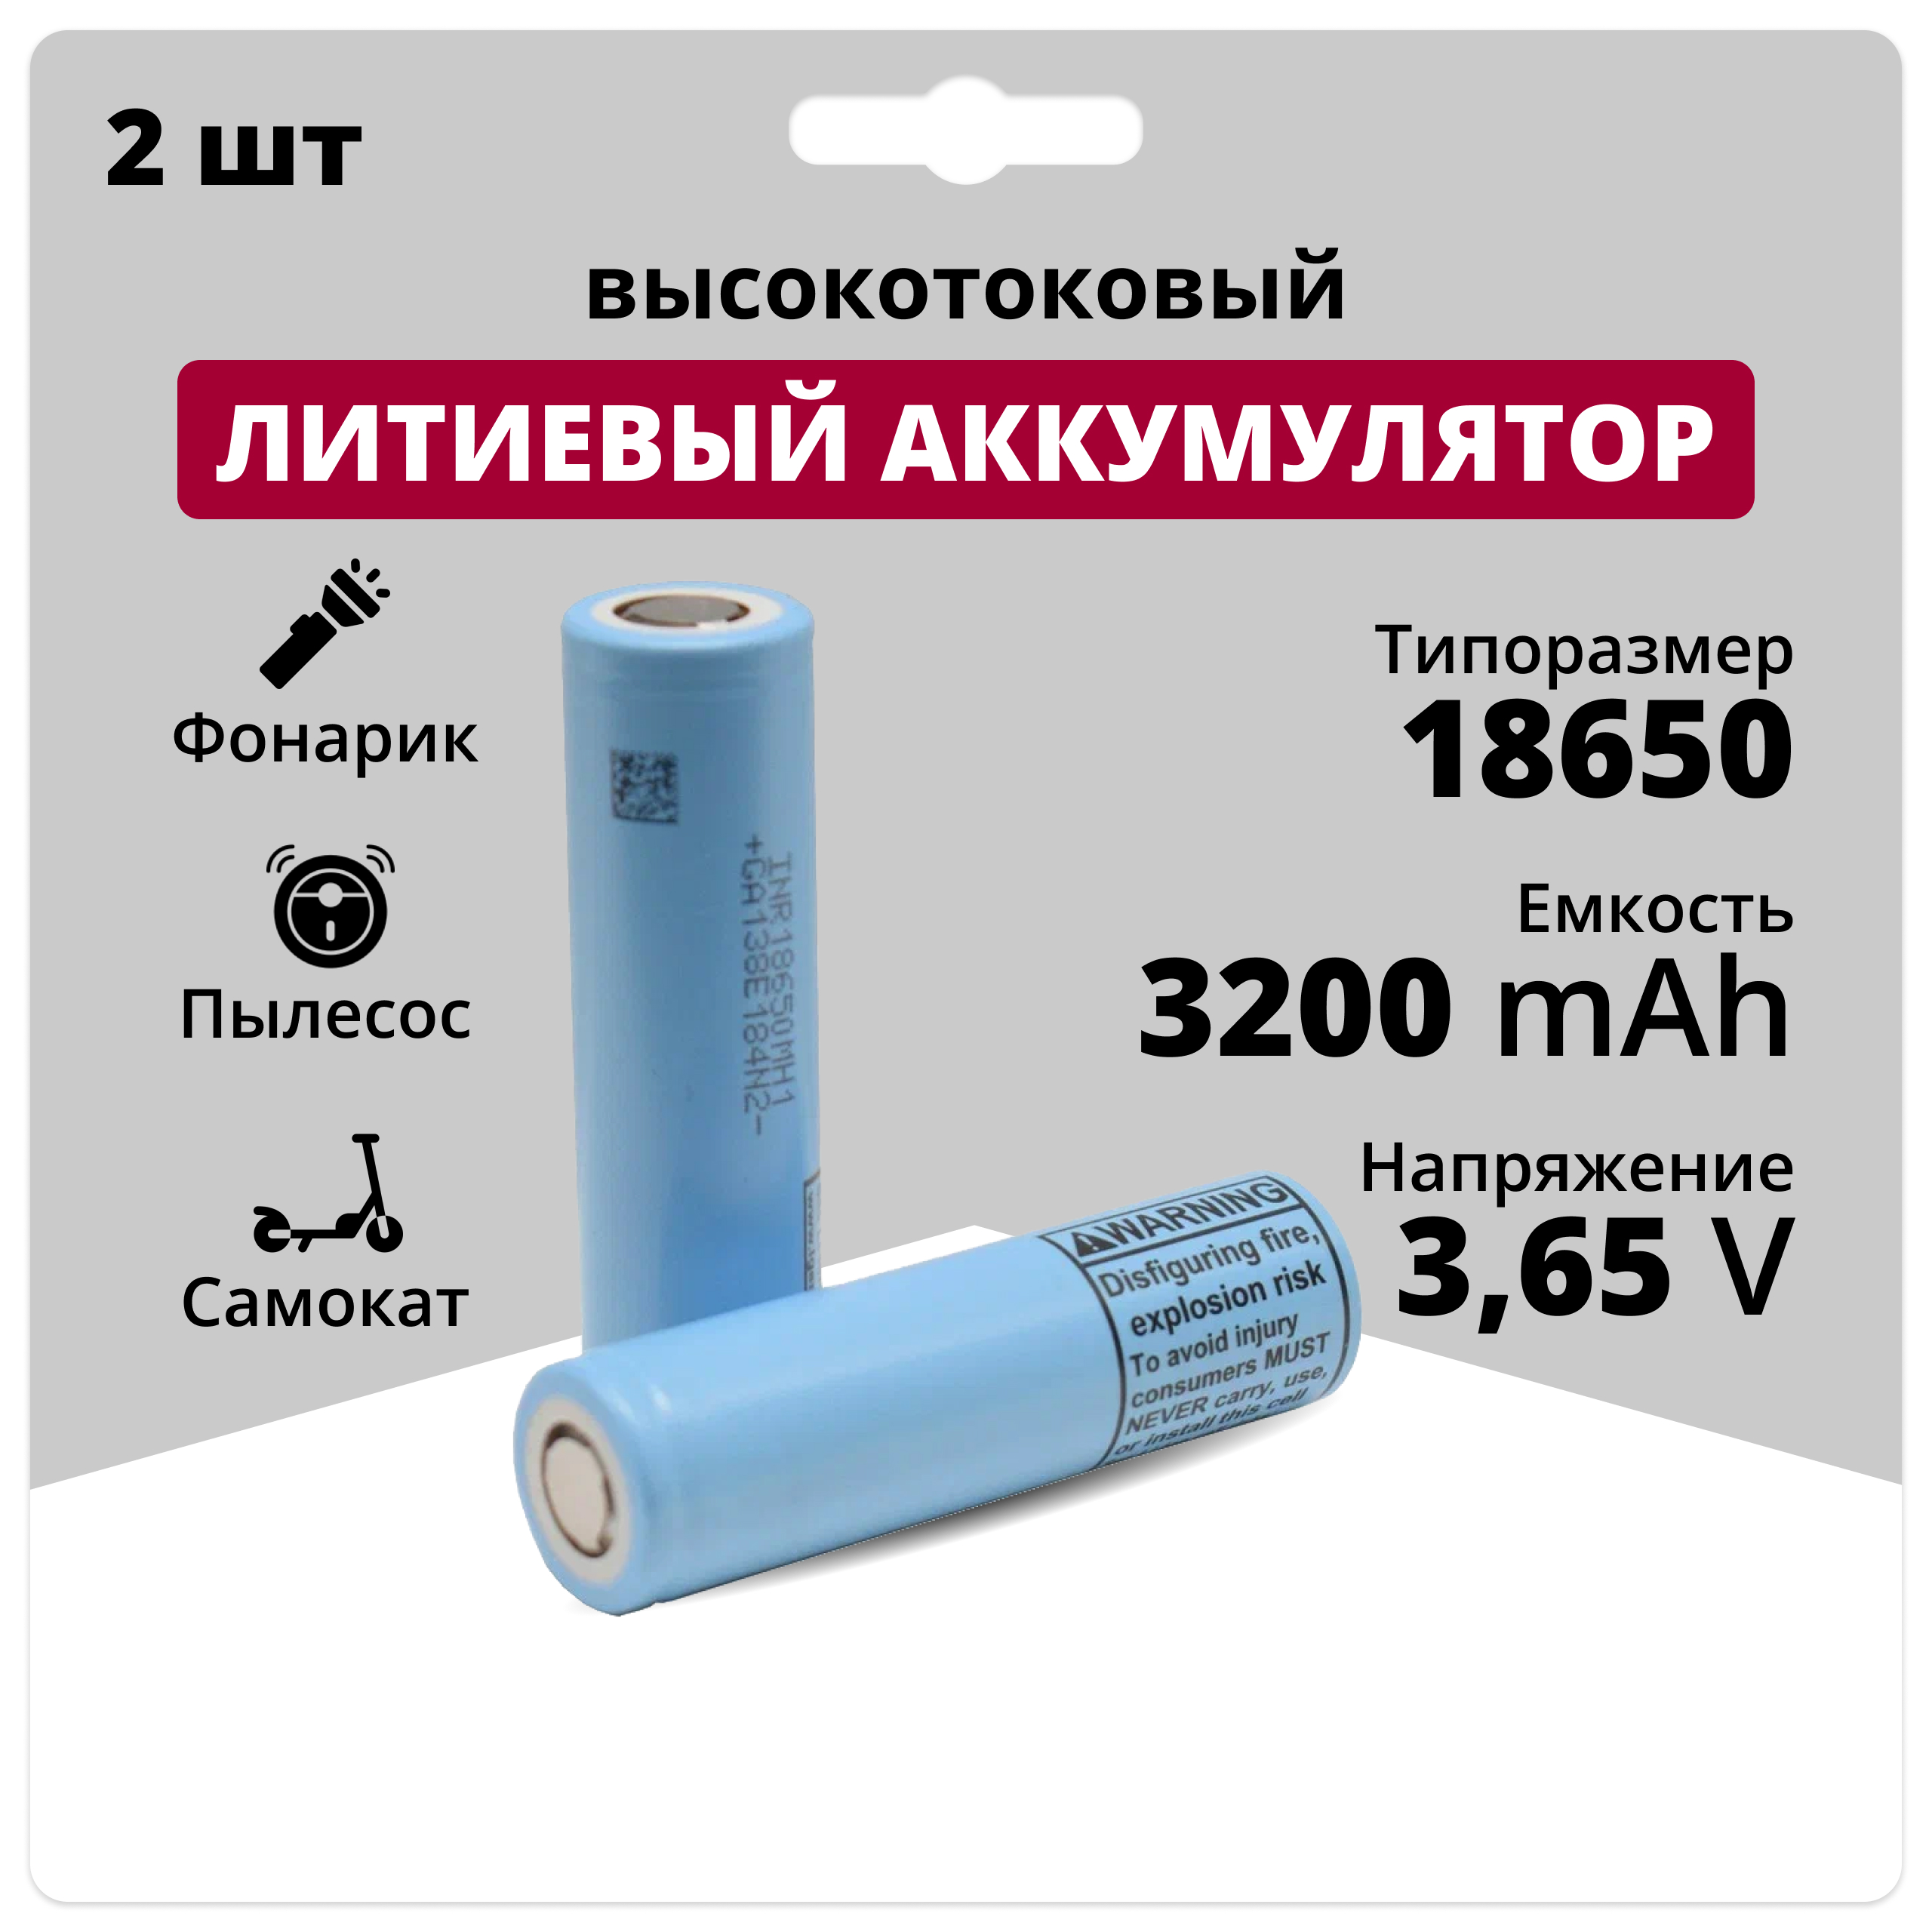 aa аккумуляторная батарейка gp 130aahc 2 шт 1300мaч Аккумулятор 18650 LG 3,65 V, 3,2 Аh, 10 A, аккумуляторная батарейка Li-ion, 2 шт.